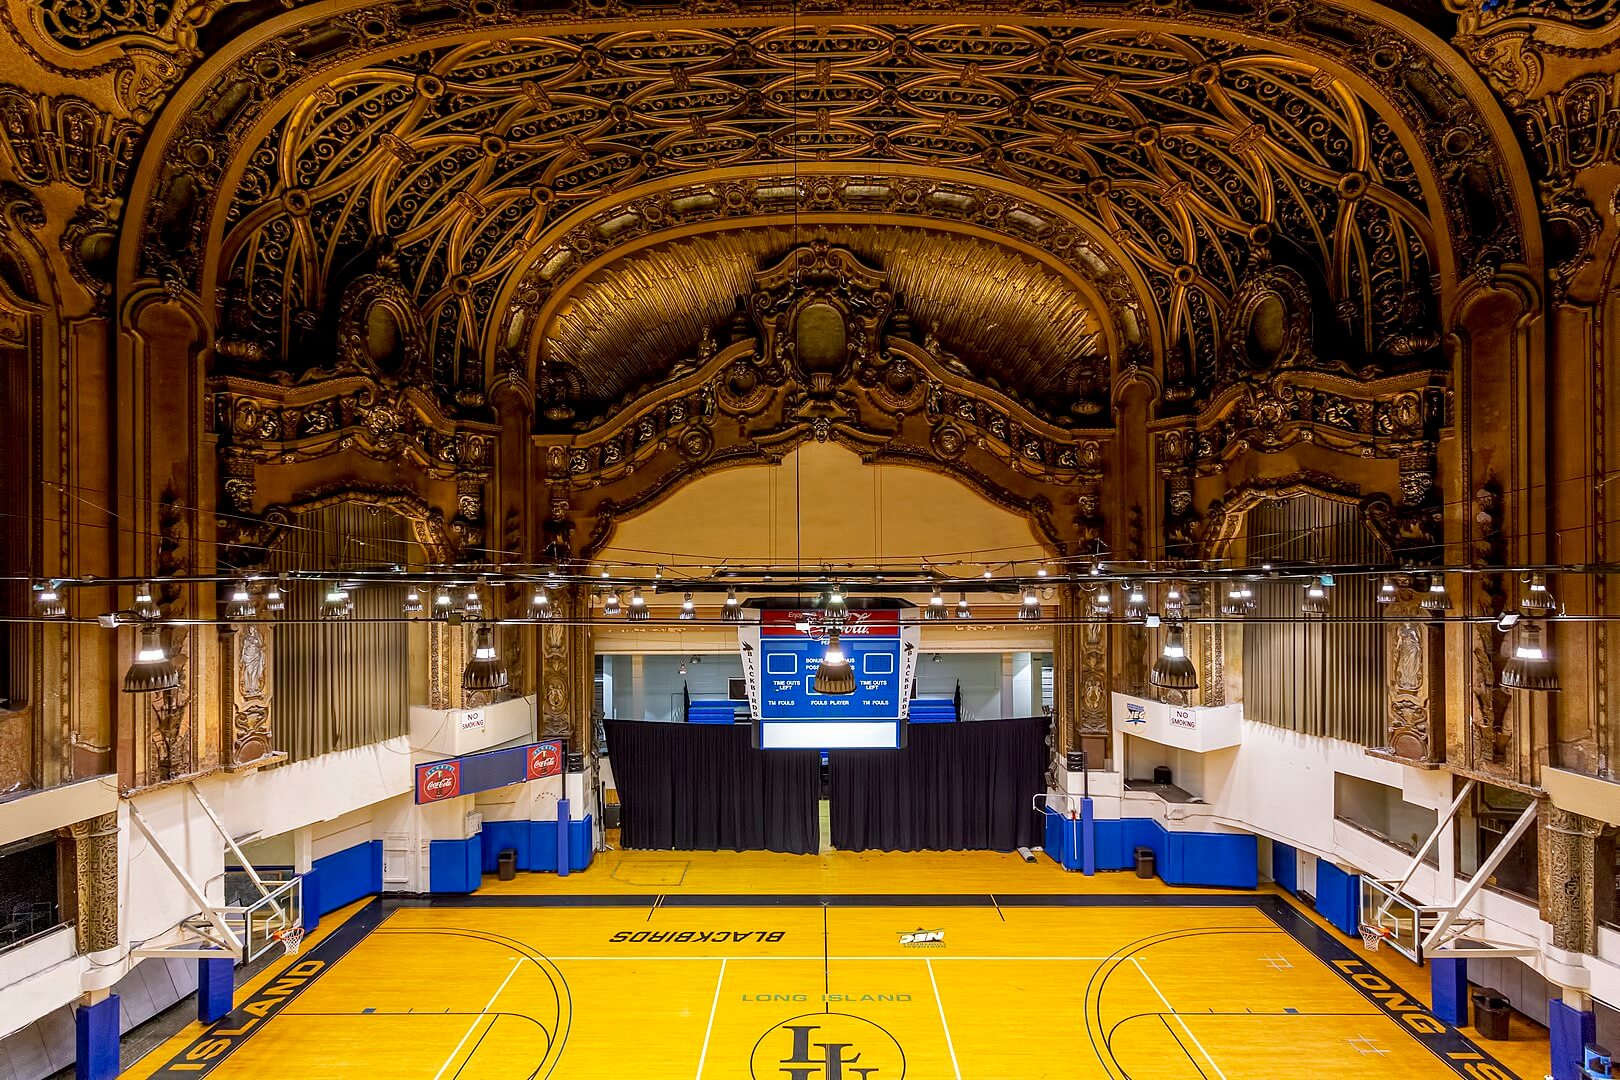 the concert venue as a basketball court